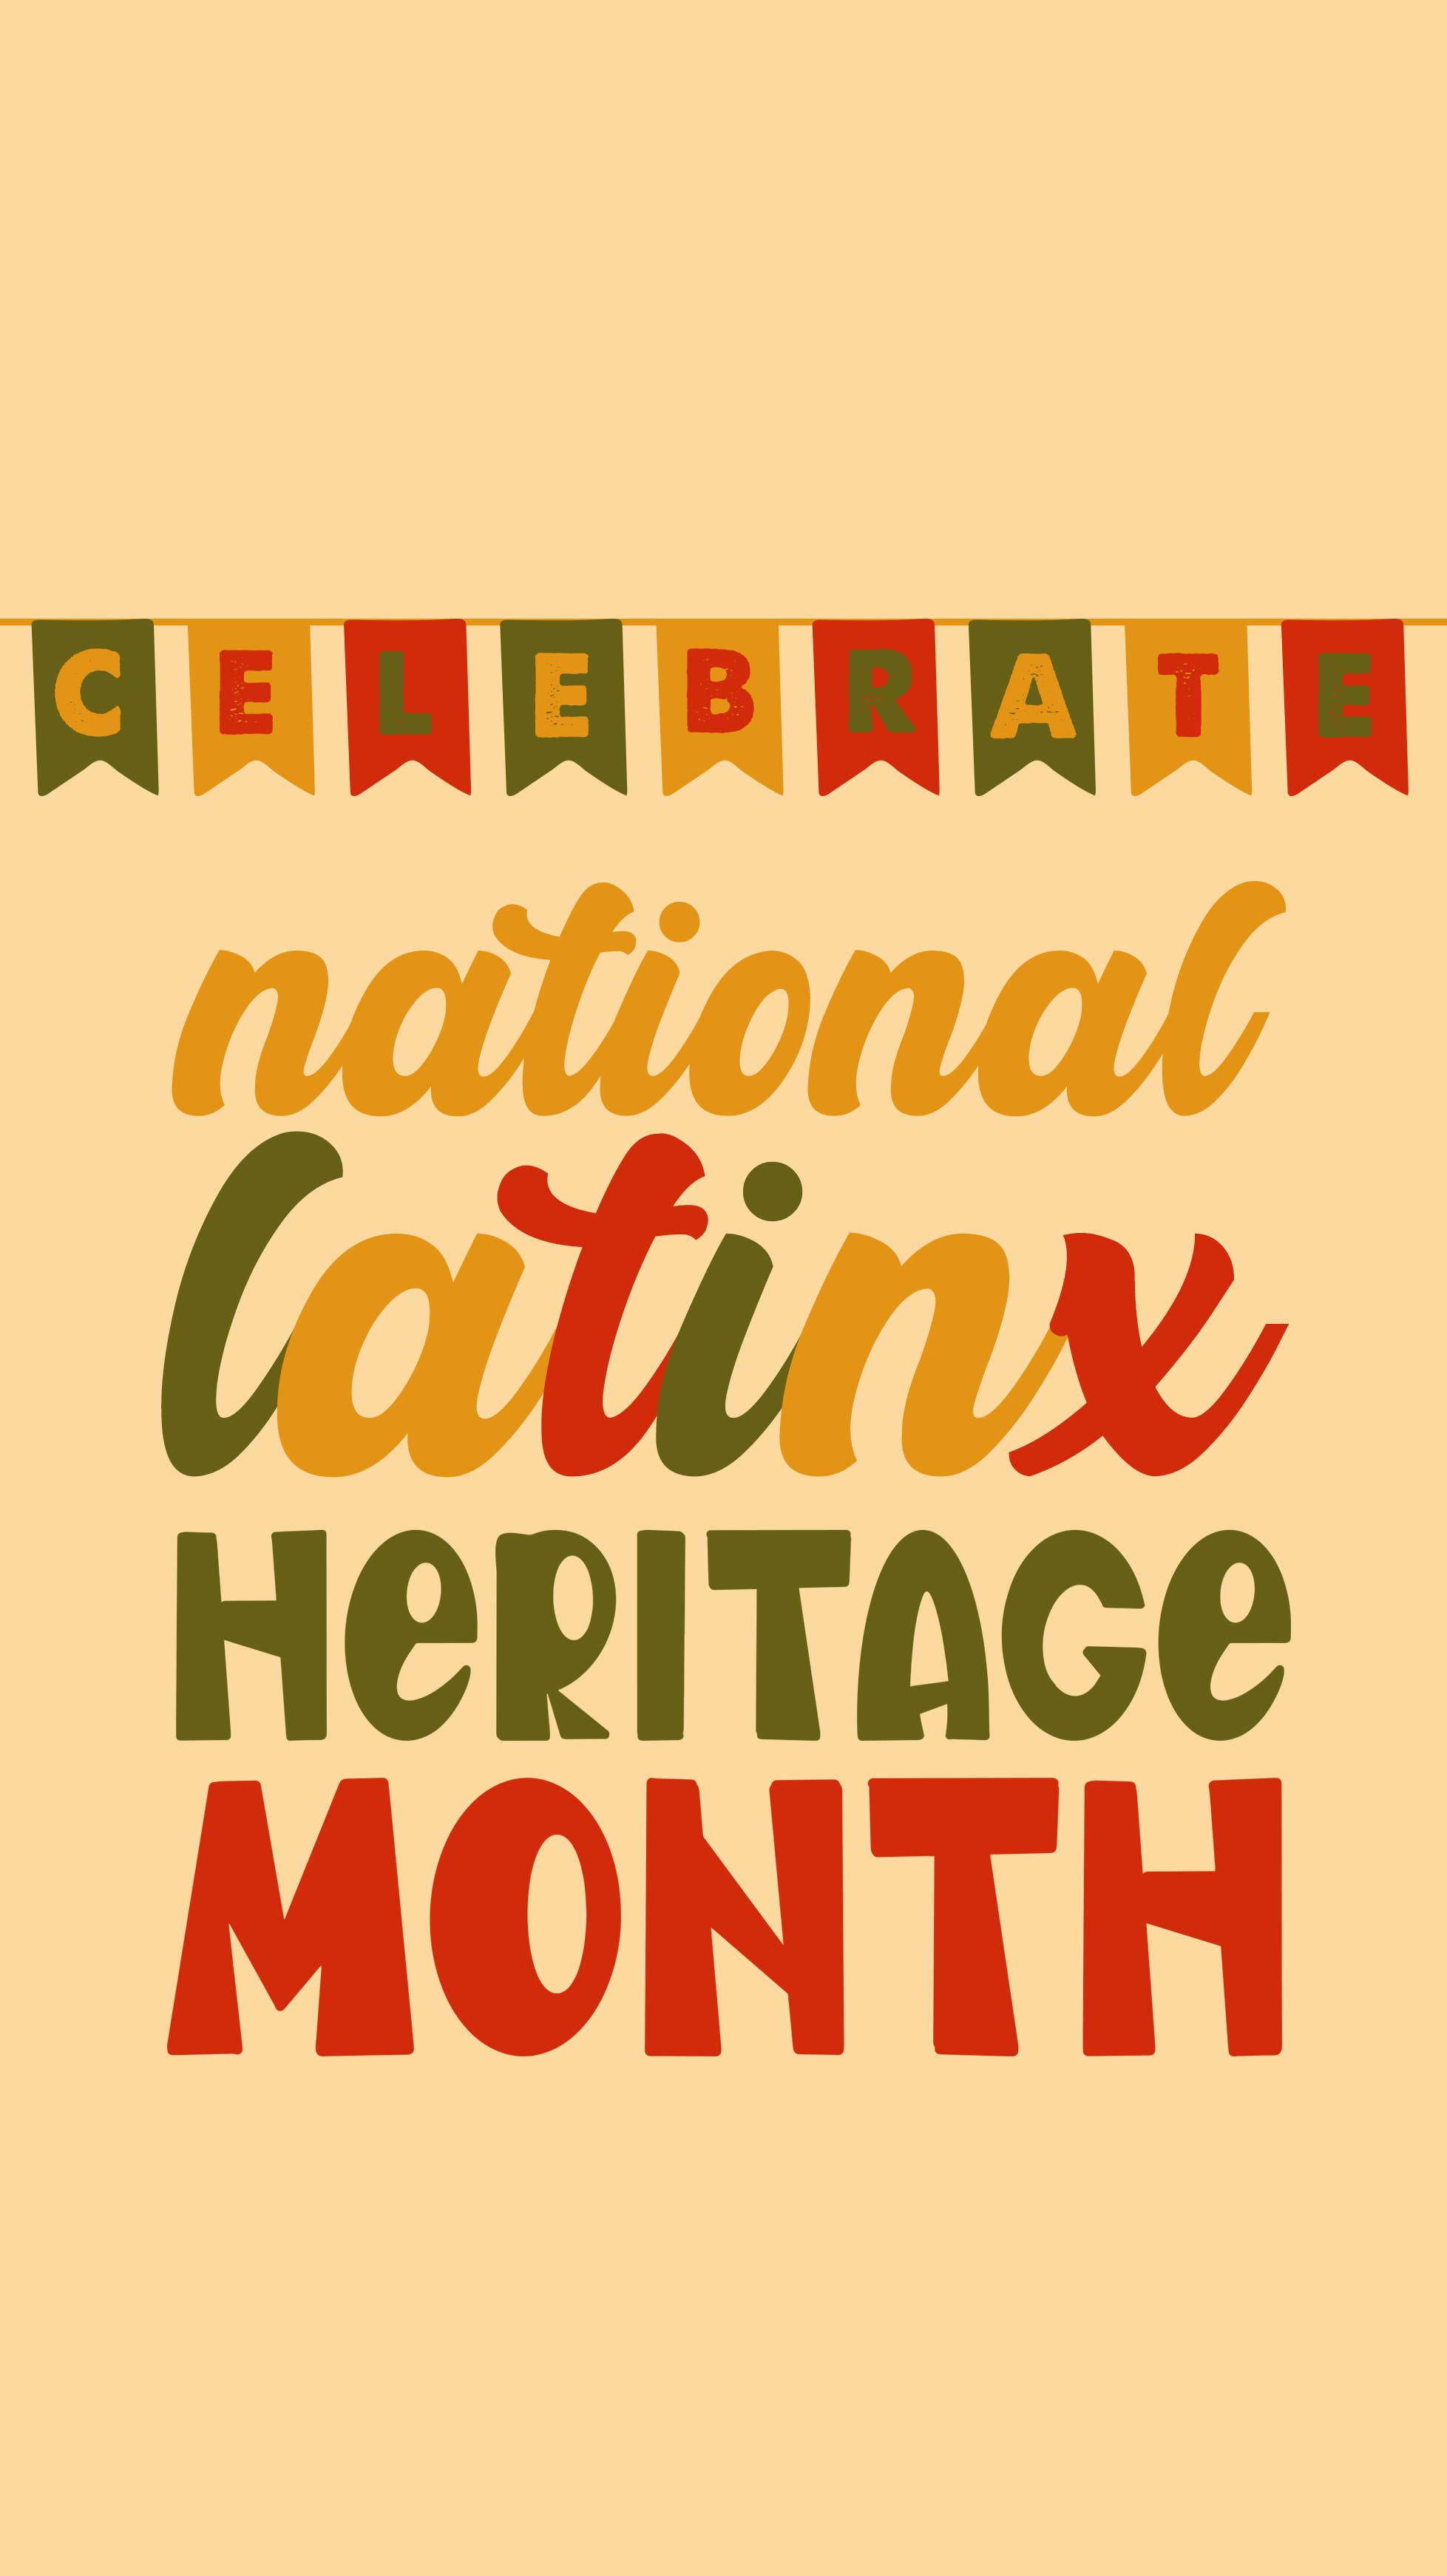 National Latinx Heritage Month